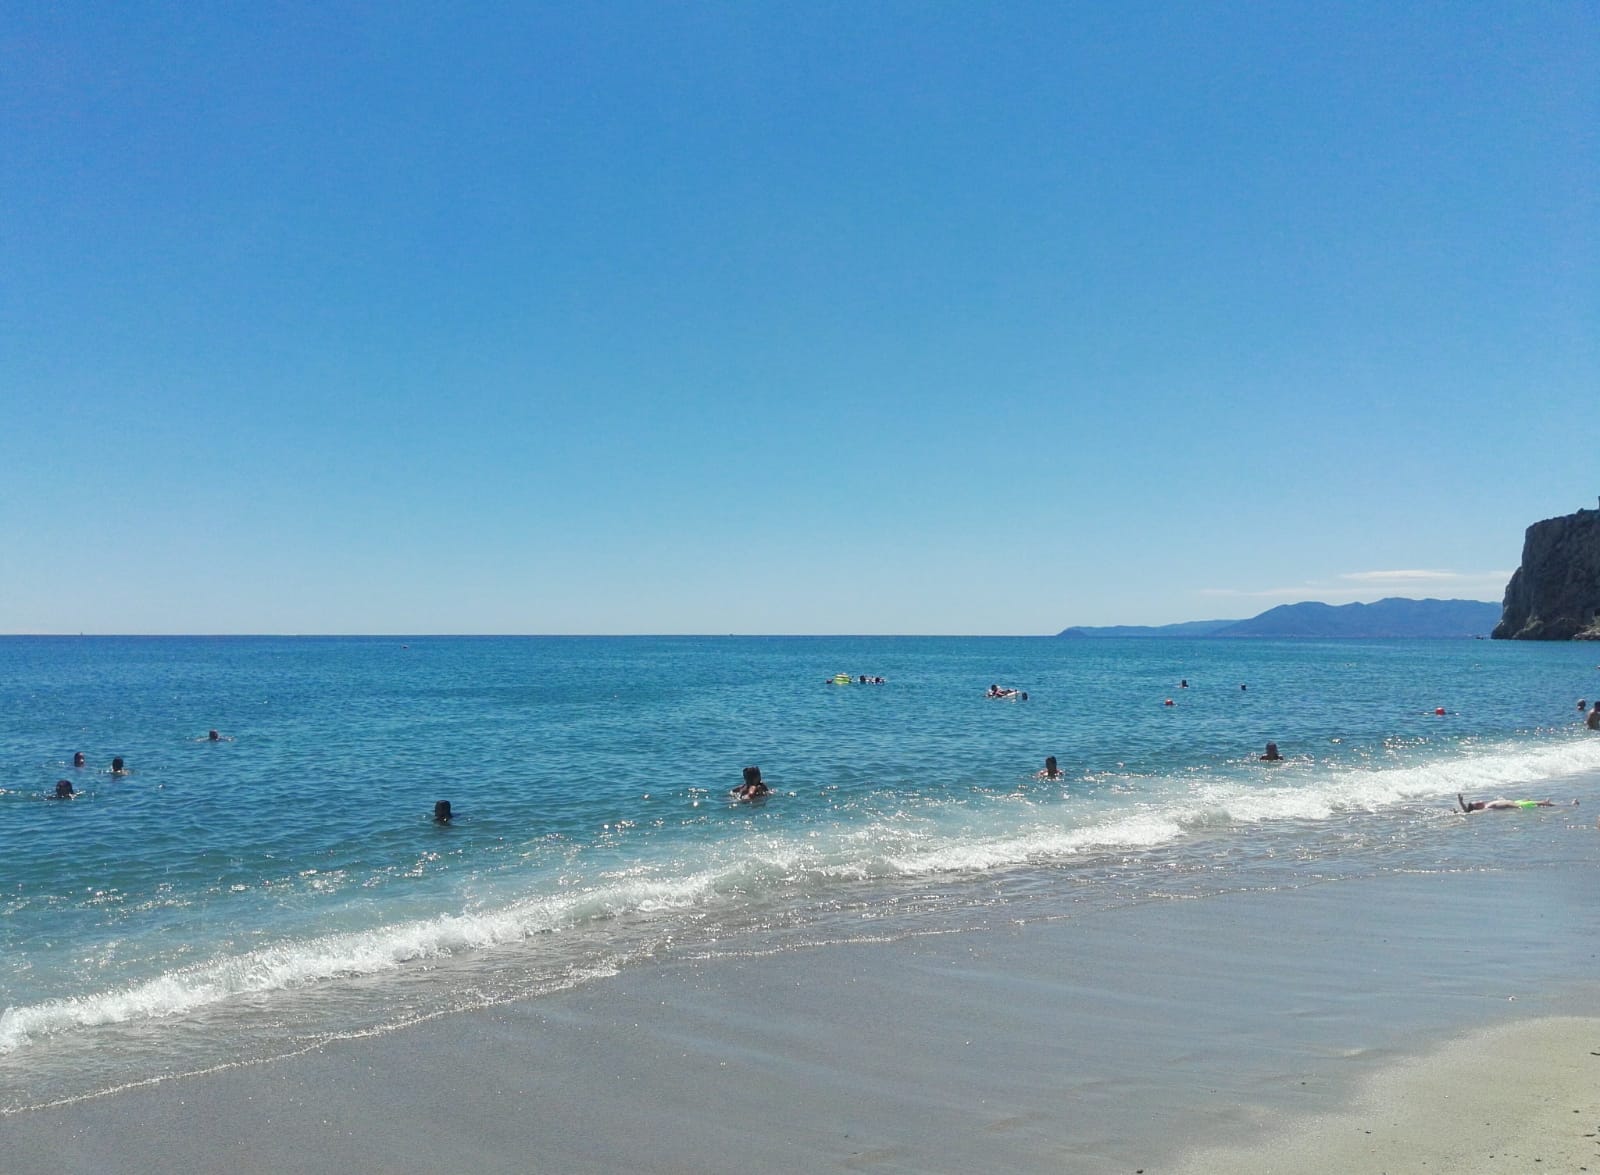 Photo de Spiaggia libera Attrezzata avec l'eau bleu de surface